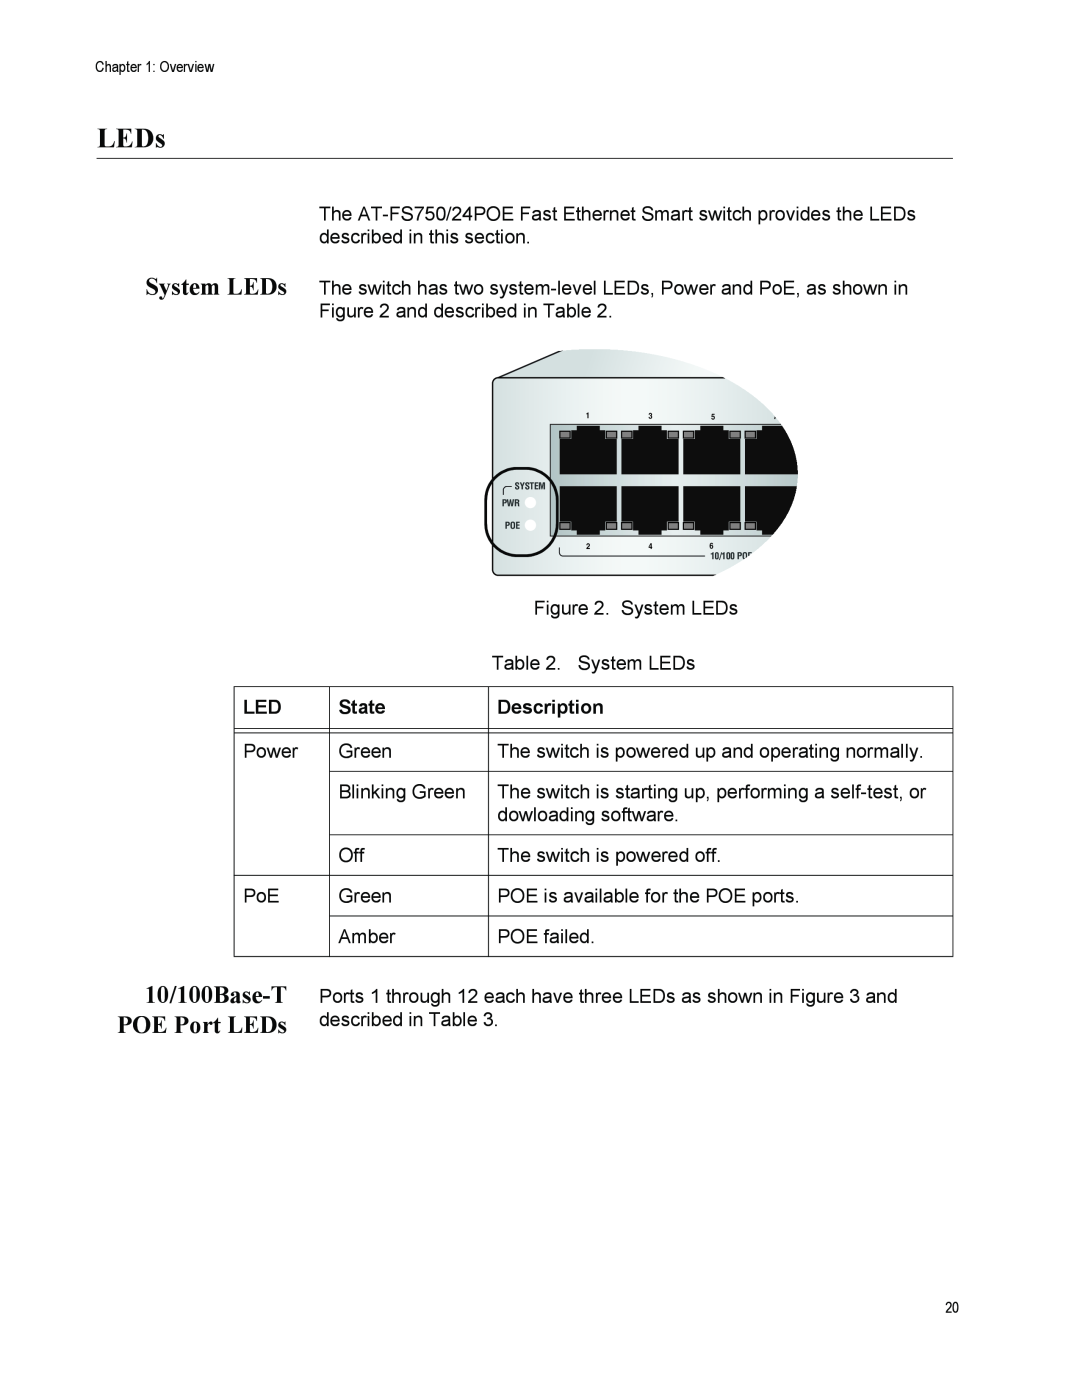 Allied Telesis AT-FS750/24POE manual 10/100Base-T POE Port LEDs, State, Description 